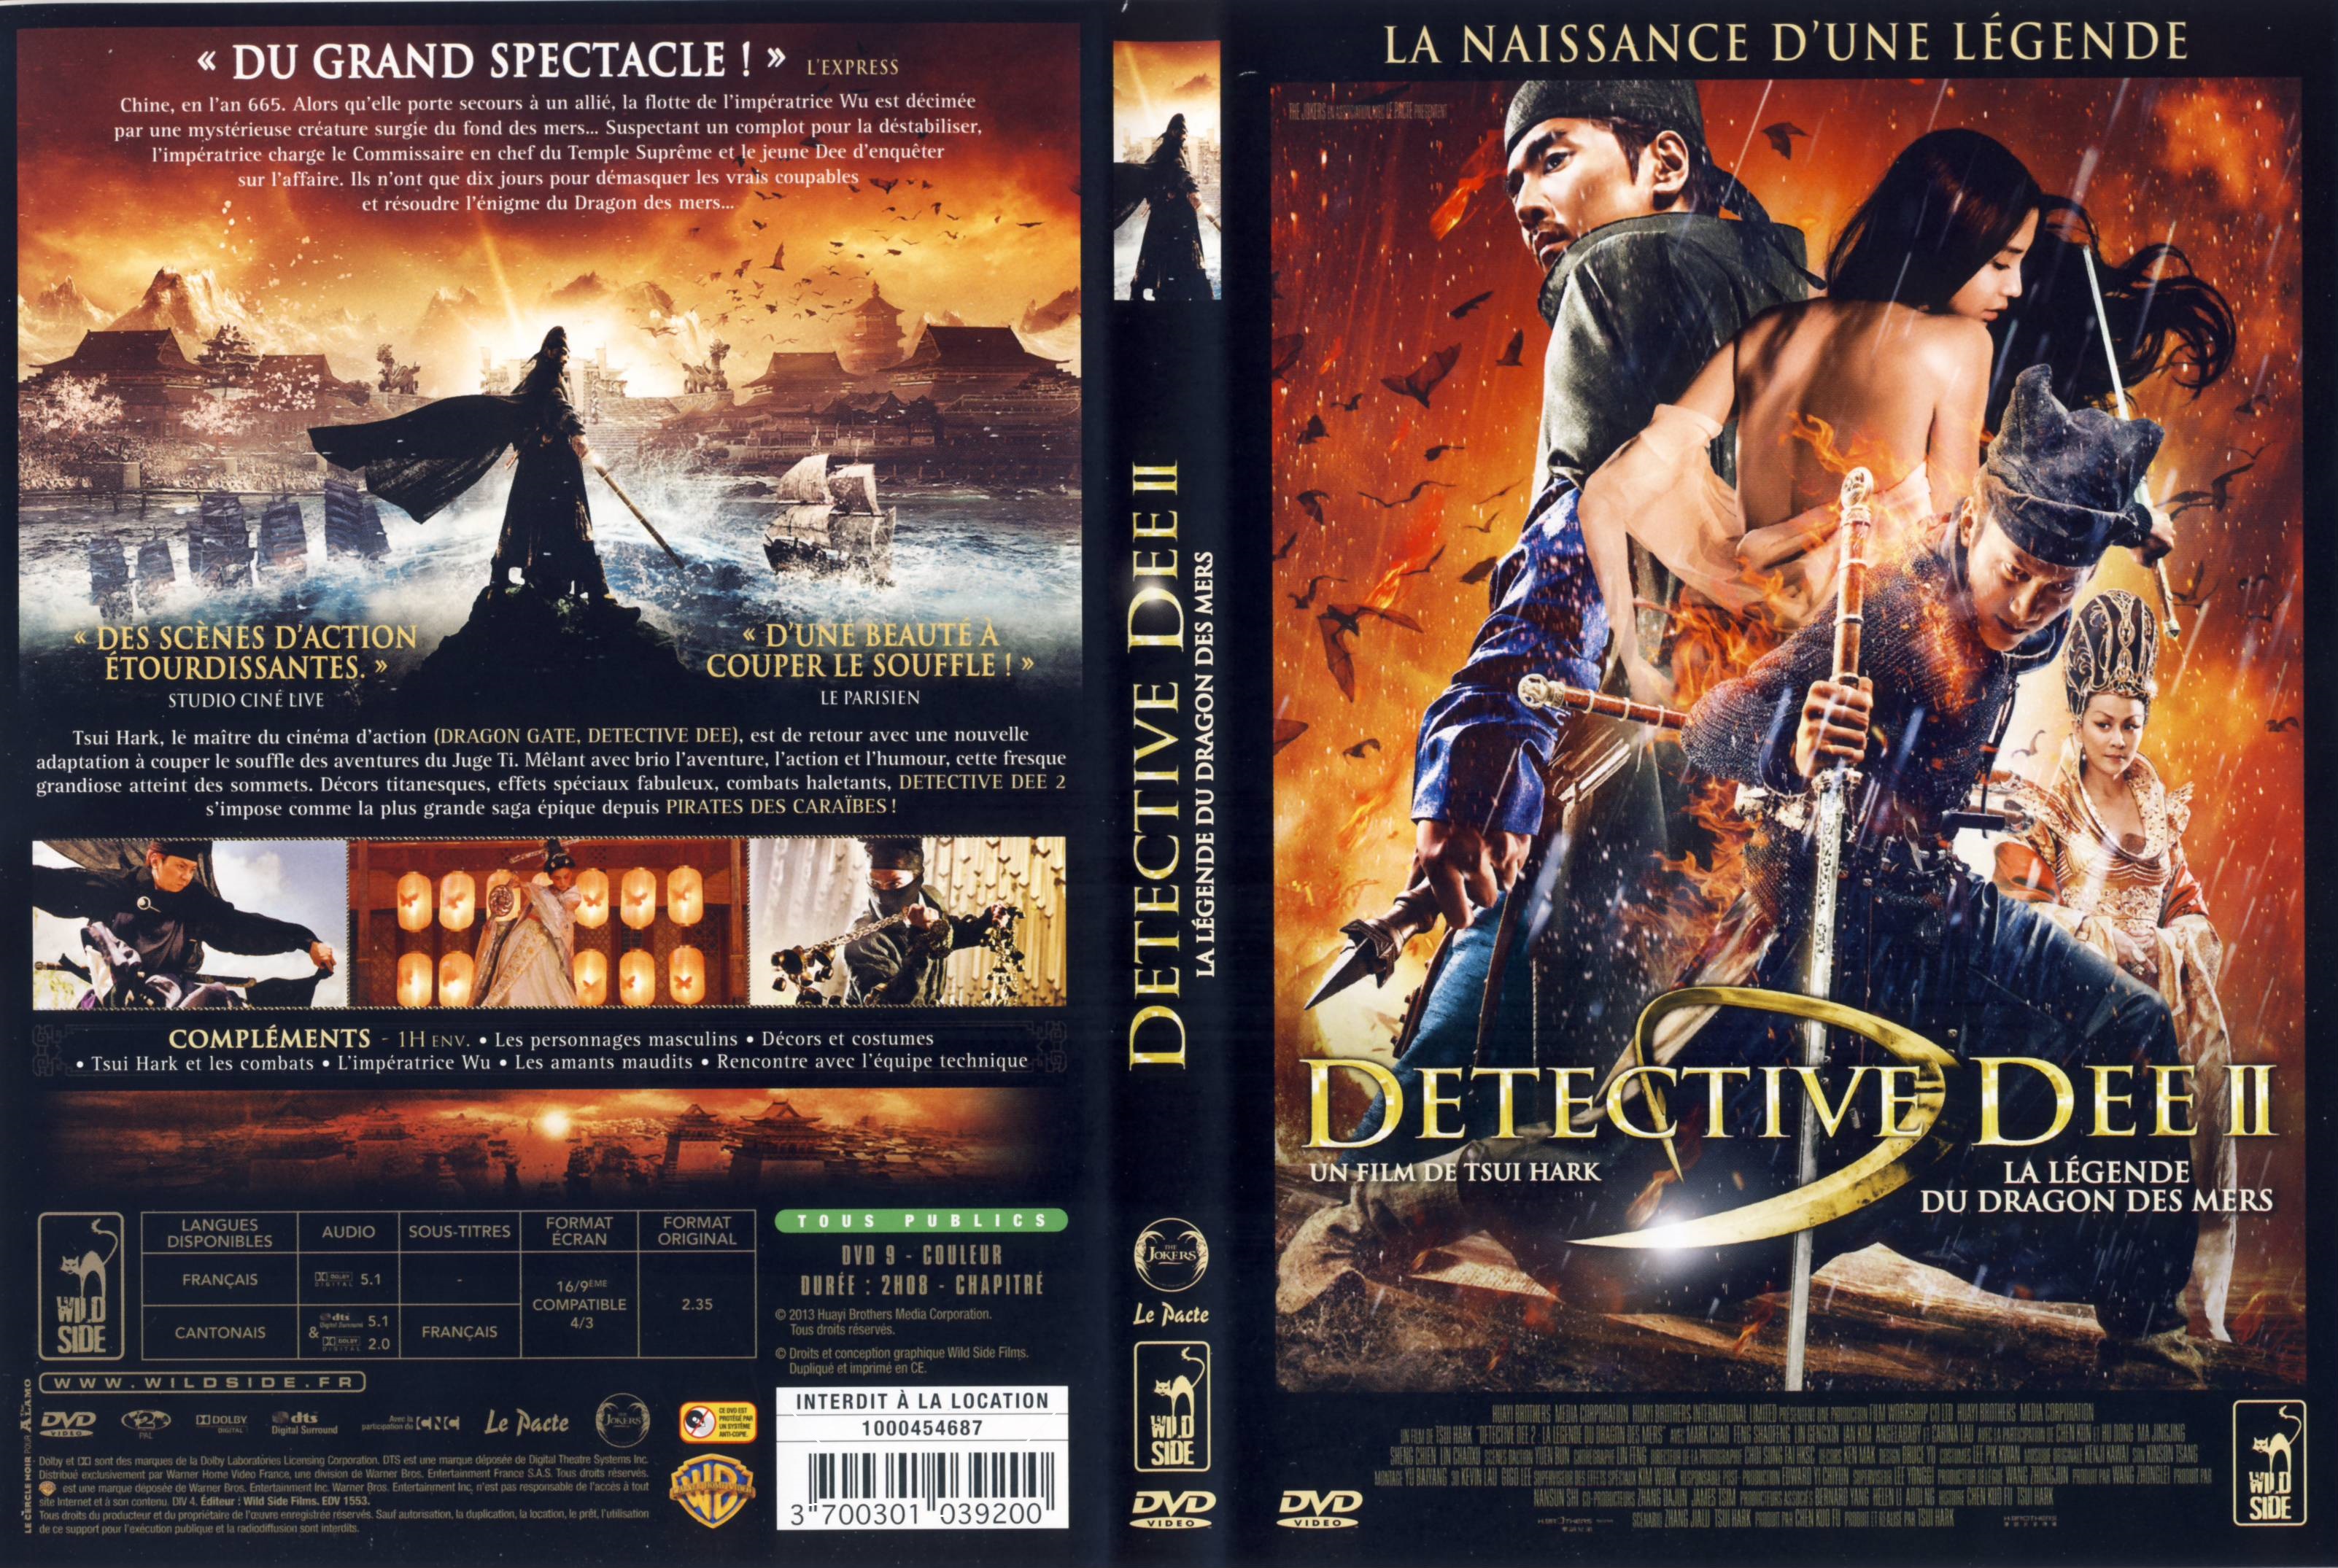 Jaquette DVD Dtective Dee II : La Lgende du Dragon des Mers